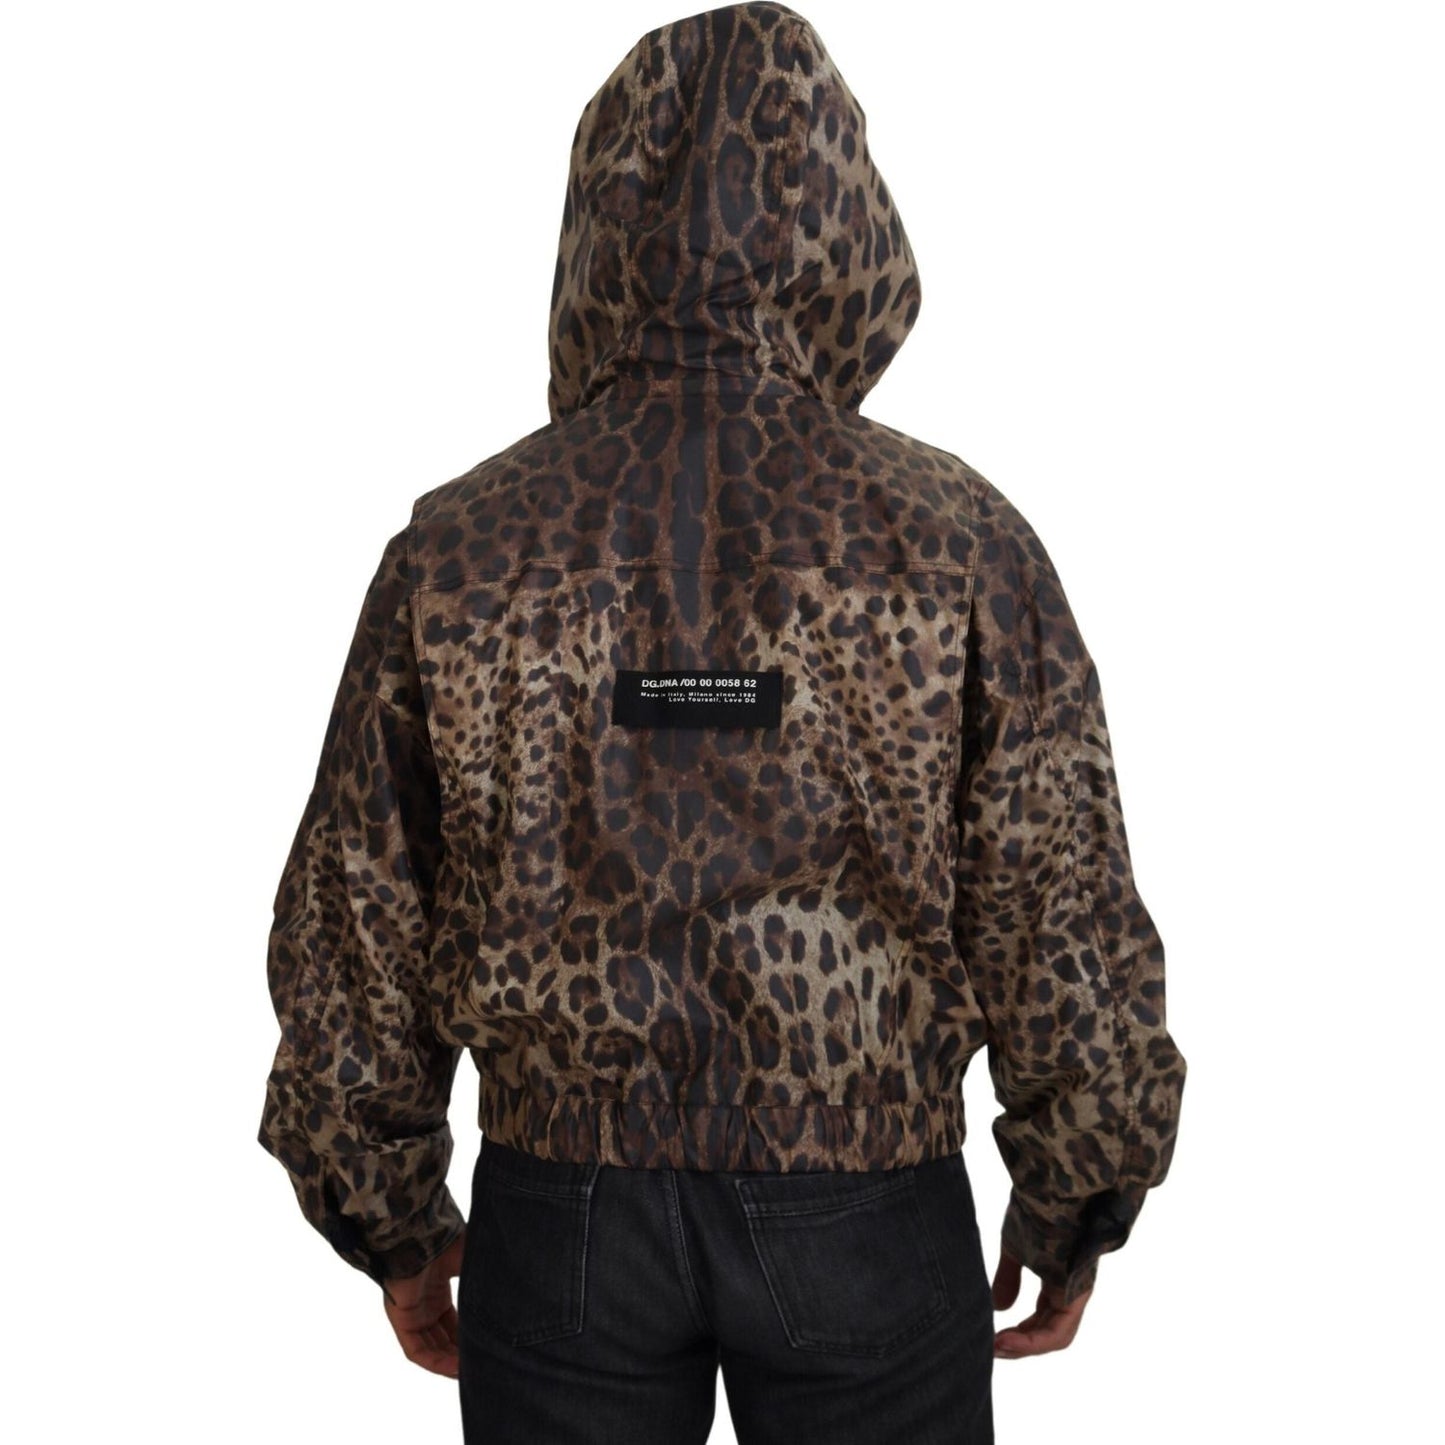 Dolce & Gabbana Elegant Leopard Print Hooded Jacket brown-leopard-print-men-hooded-jacket IMG_4054-scaled-b734147c-e15.jpg